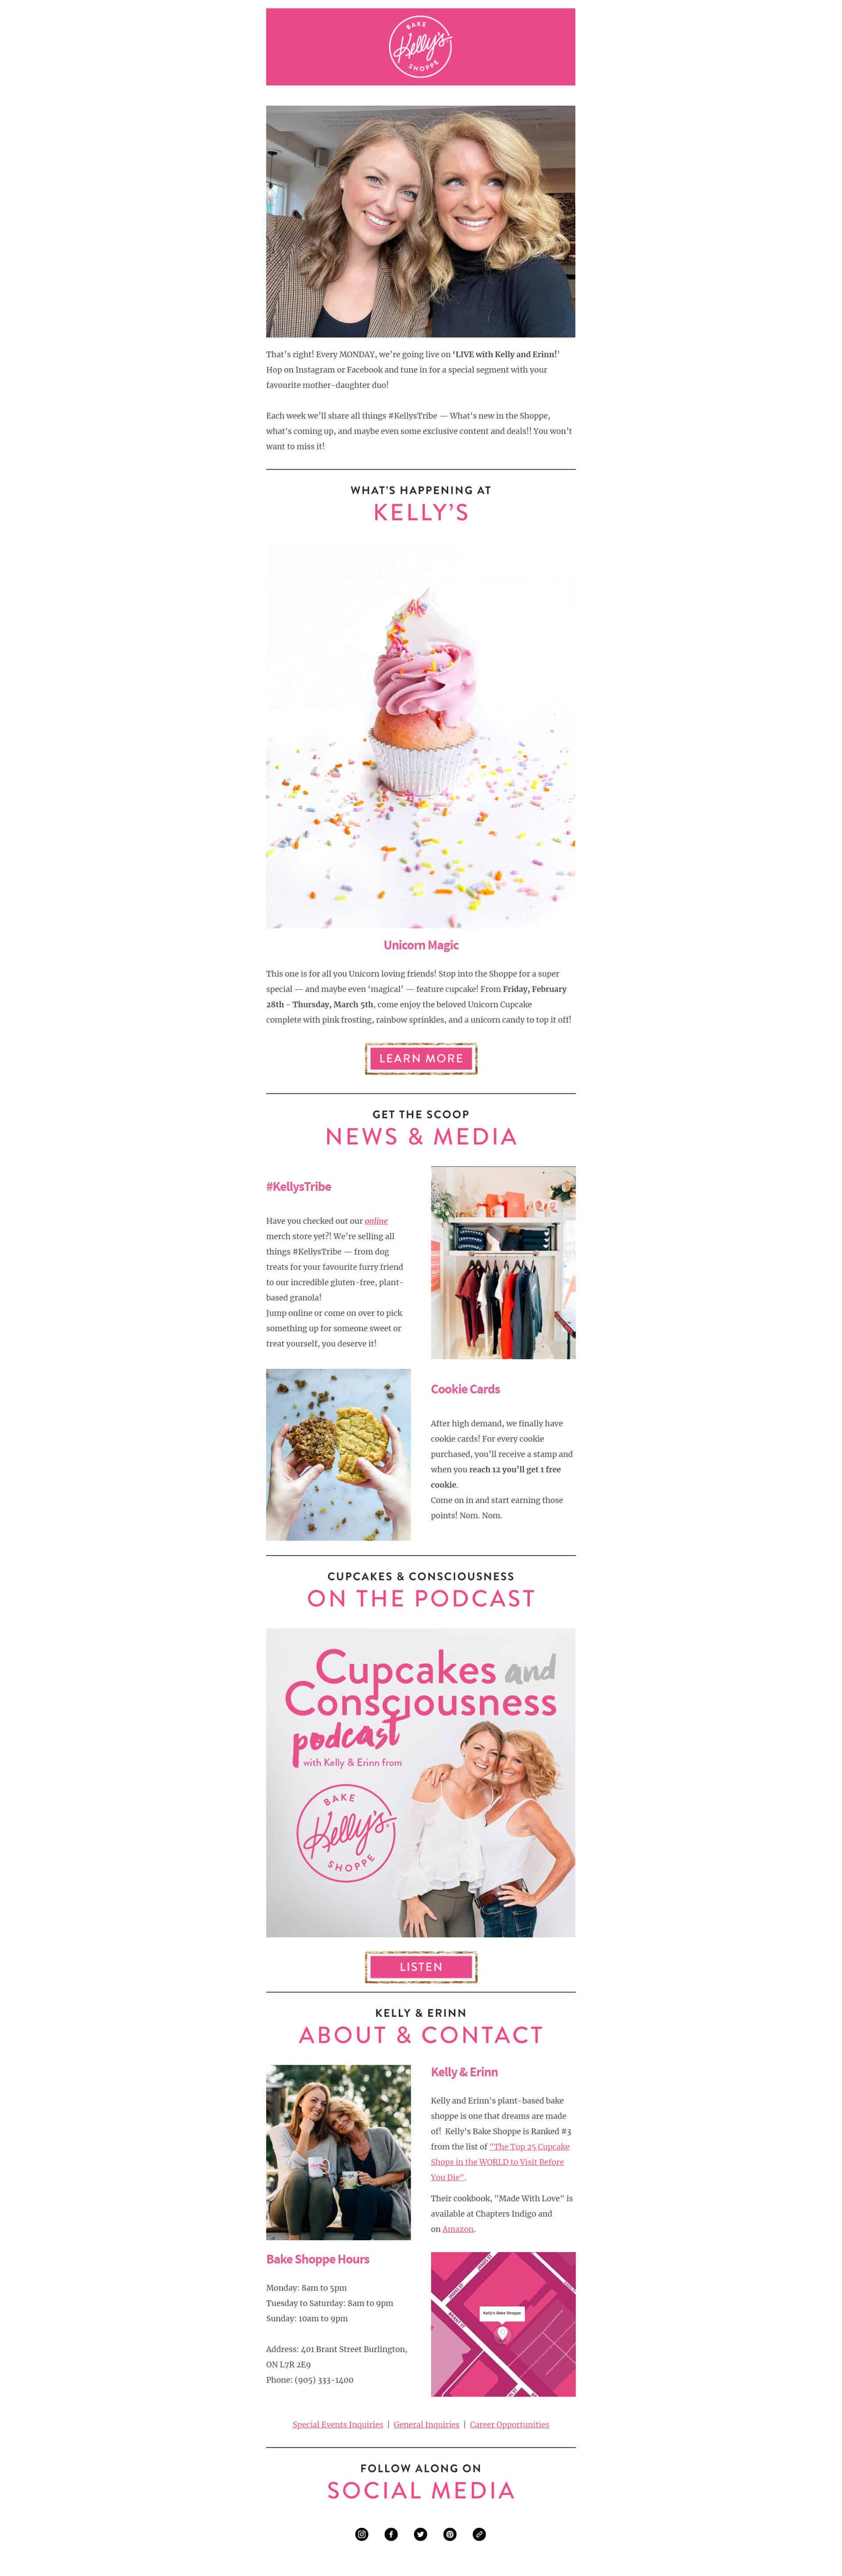 Kelly's Bake Shop Email Marketing Sample